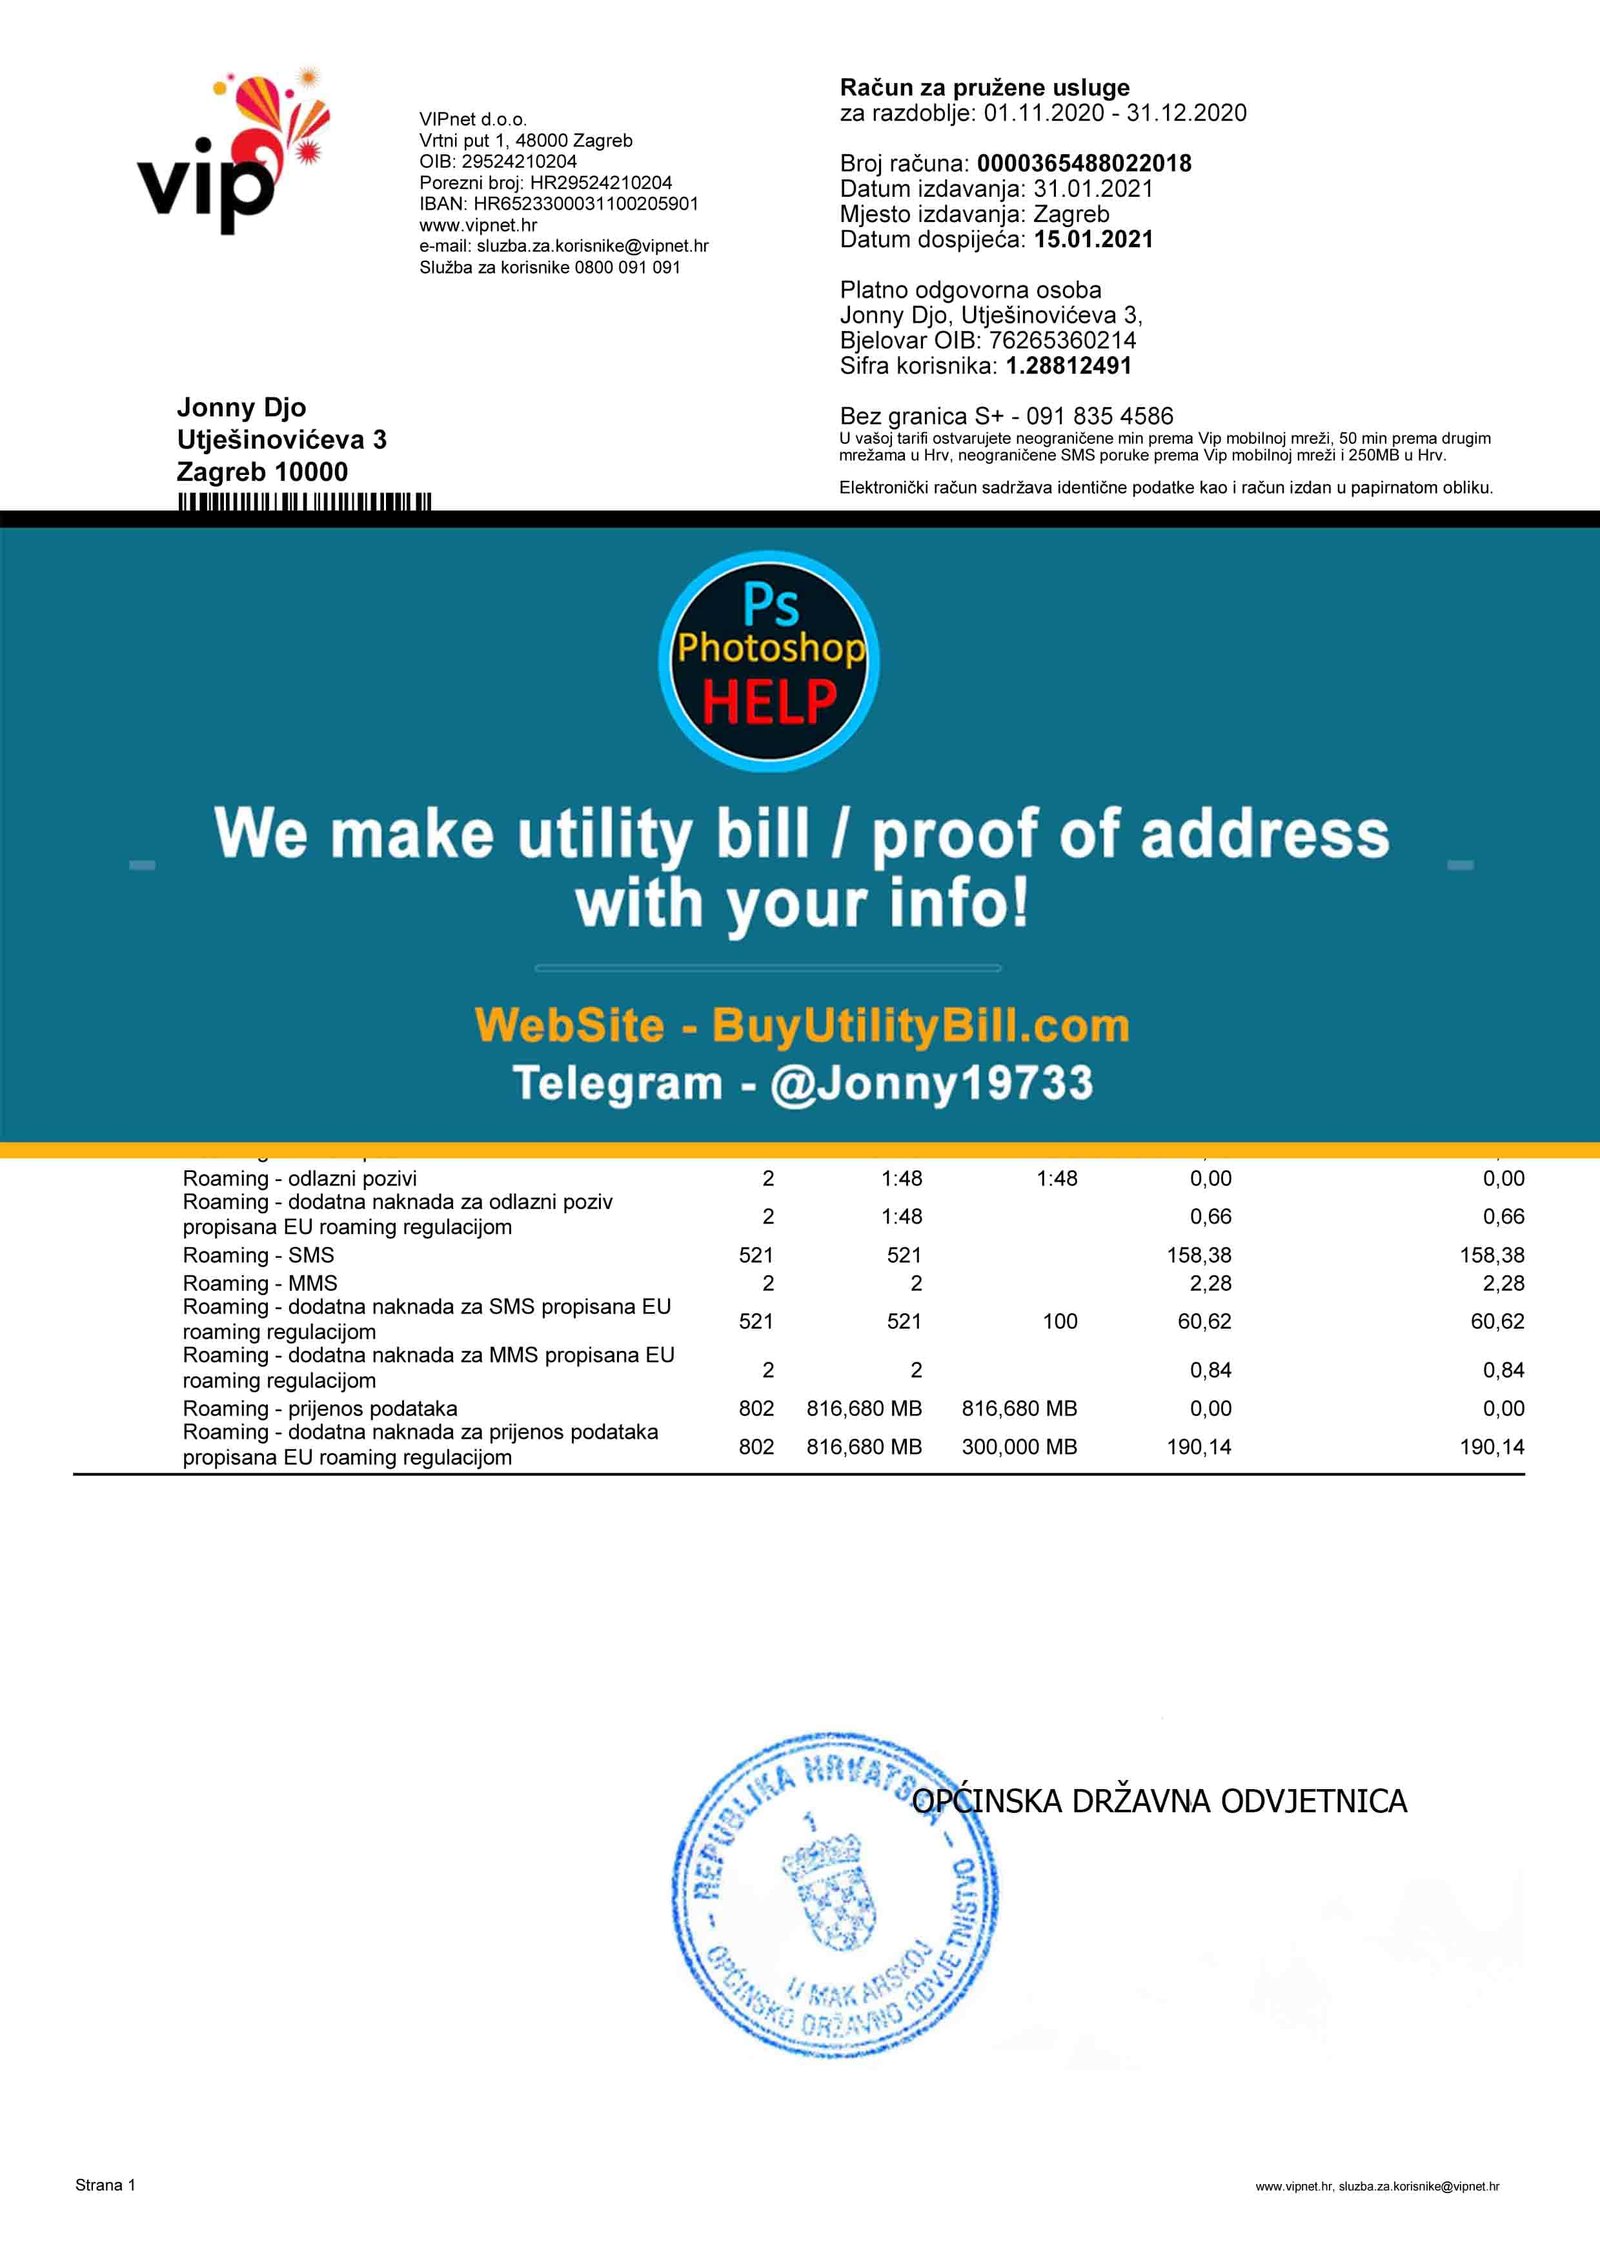 Croatia Phone Fake Utility Bill VIP Fake Utility bill